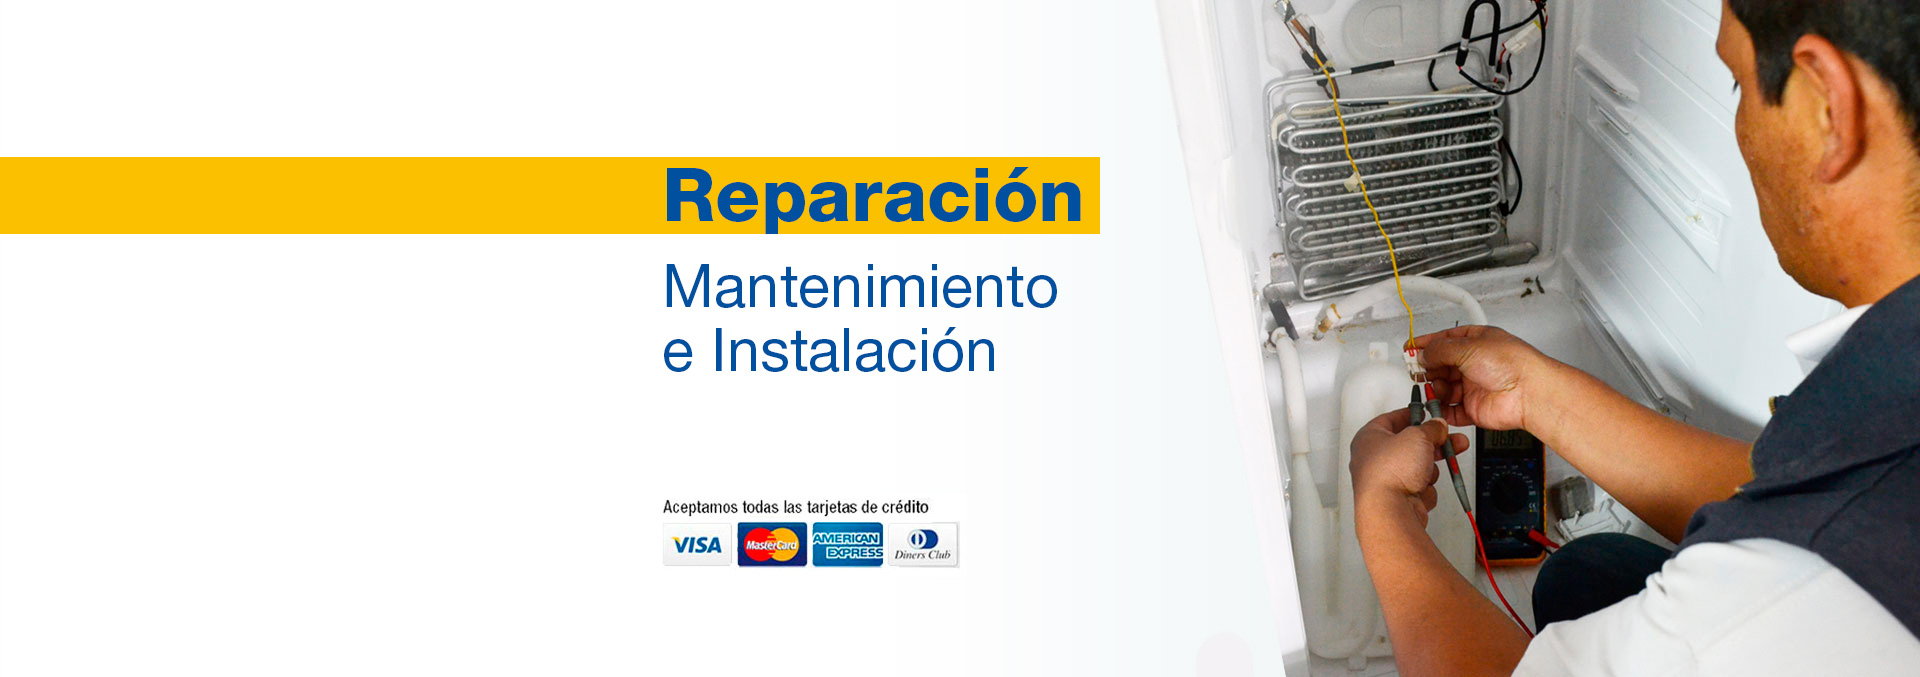 Reparación Mantenimiento e Instalación - AcaReparo